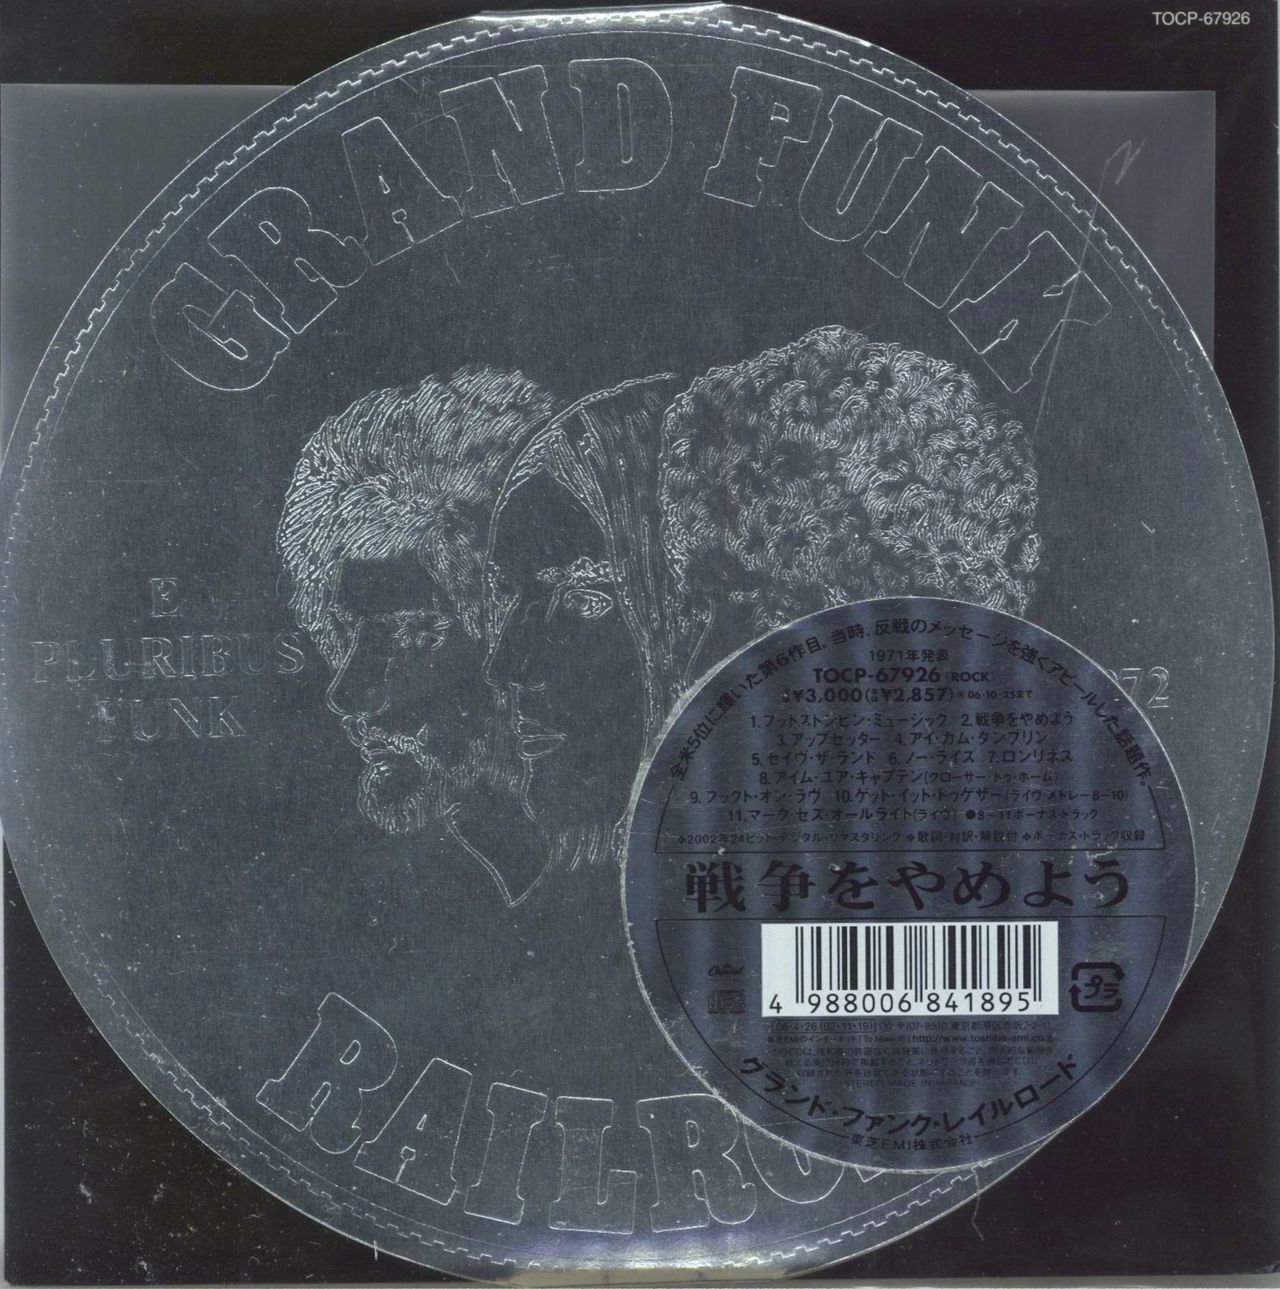 Grand Funk Railroad E Pluribus Funk Japanese CD album